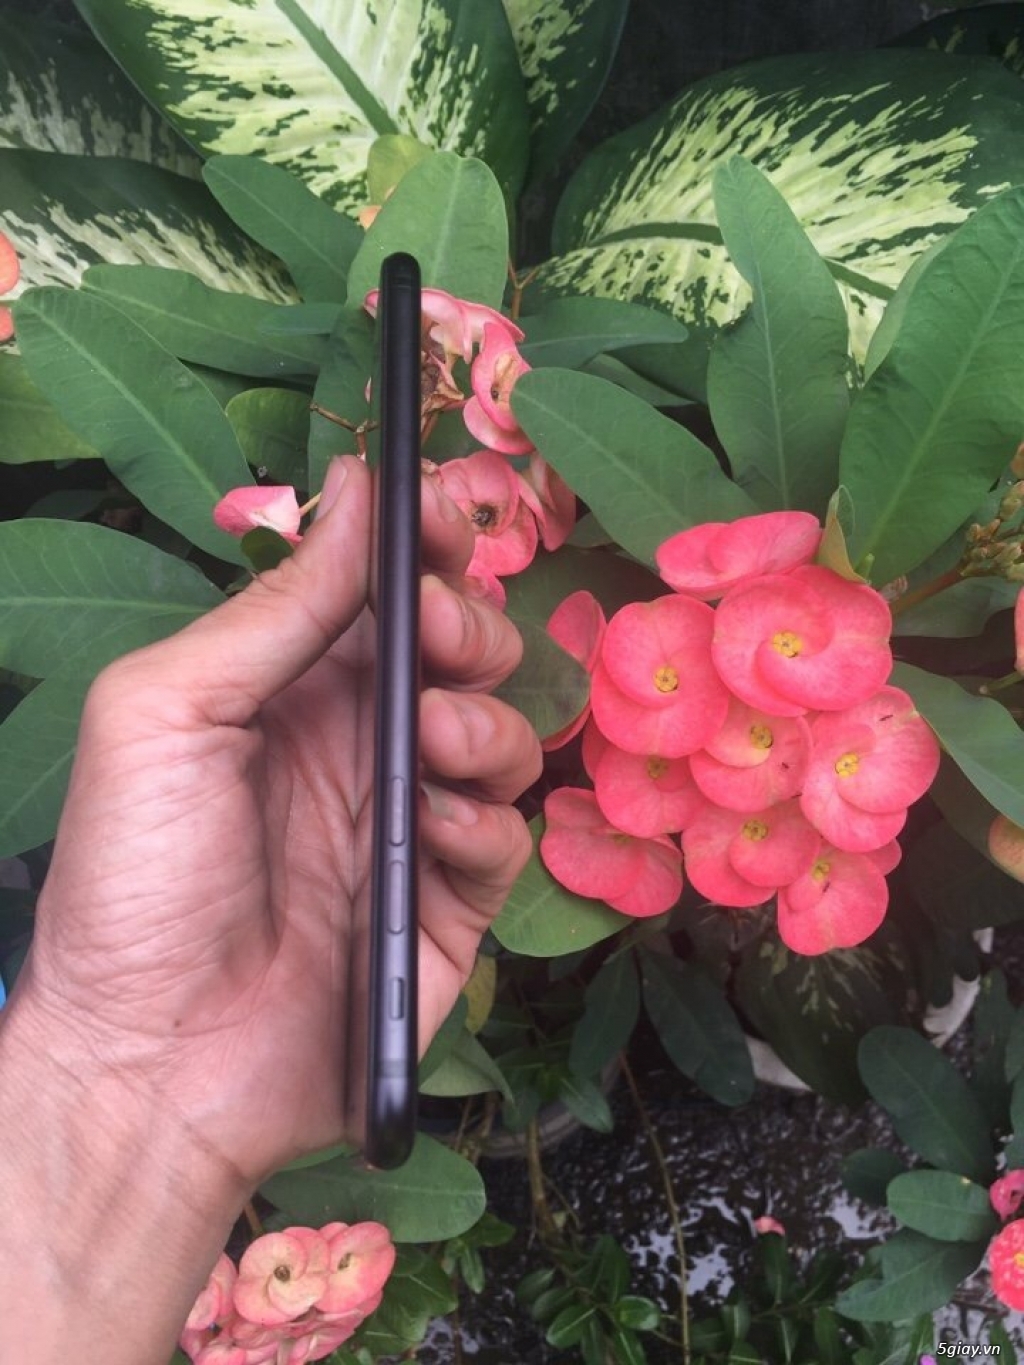 iphone 7 plus 128gb đen nham qte may zin 100% - 1